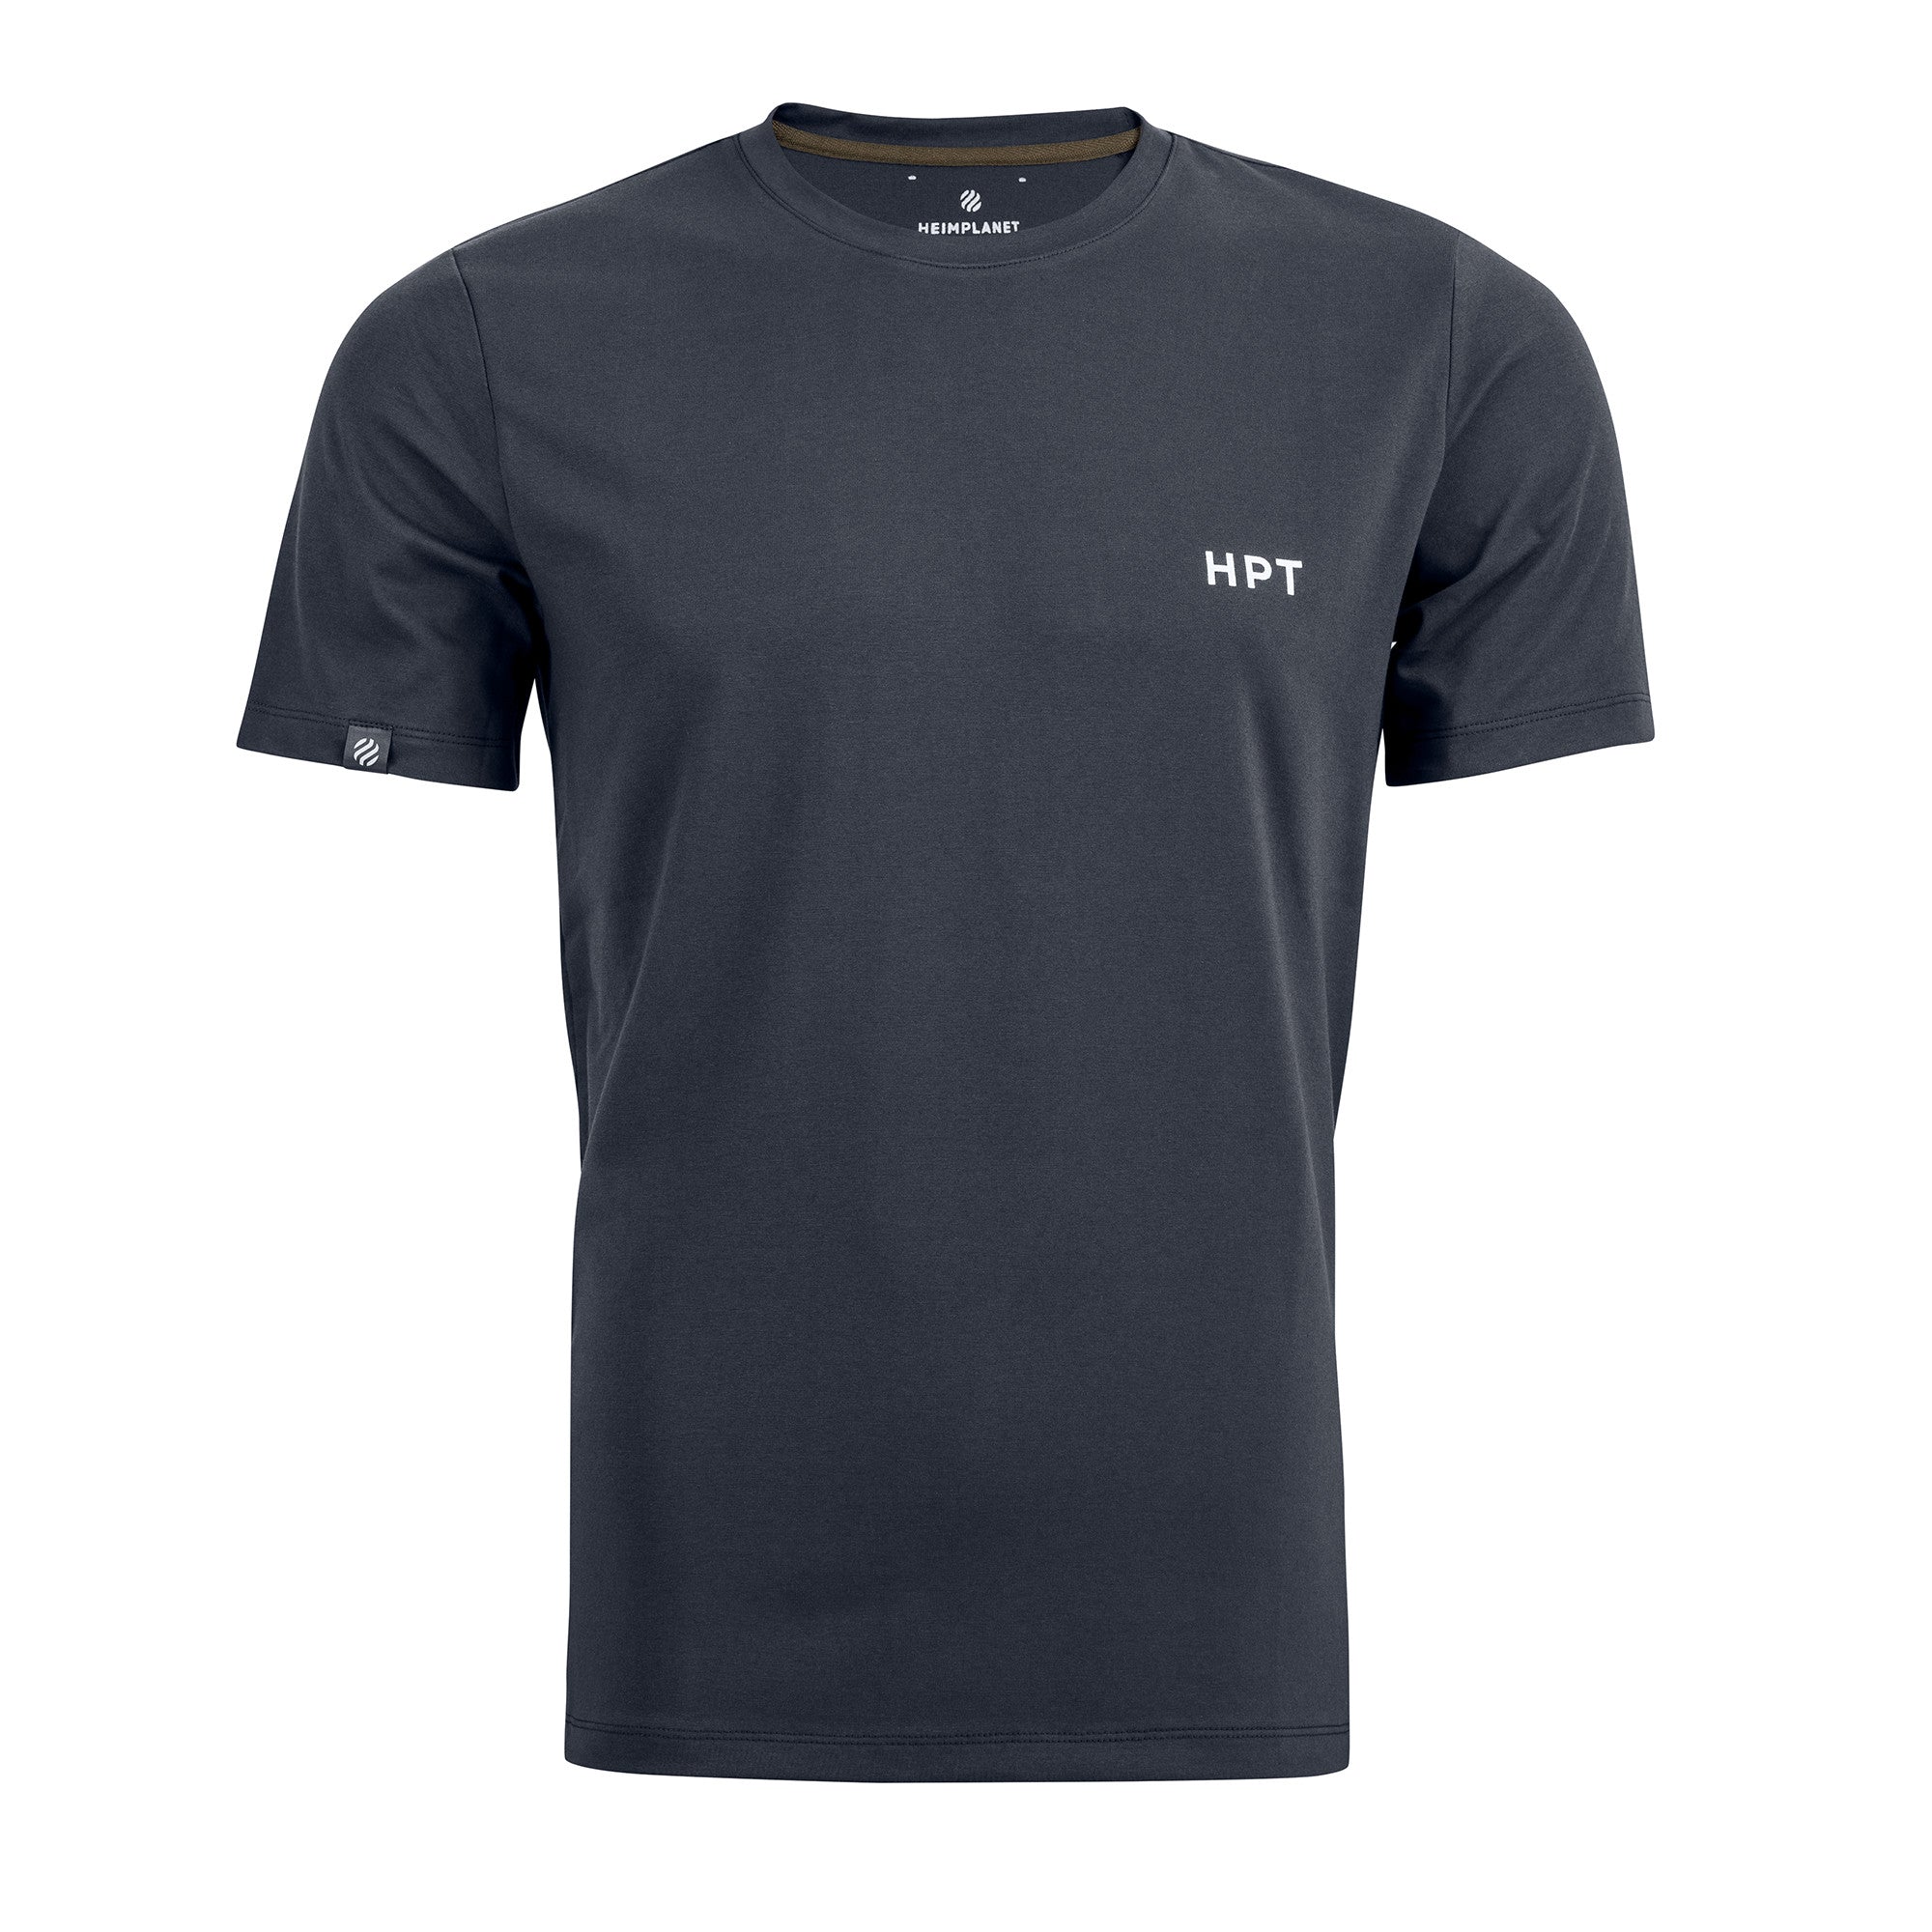 COOLEVER T-Shirt, XS logo, gris charcoal